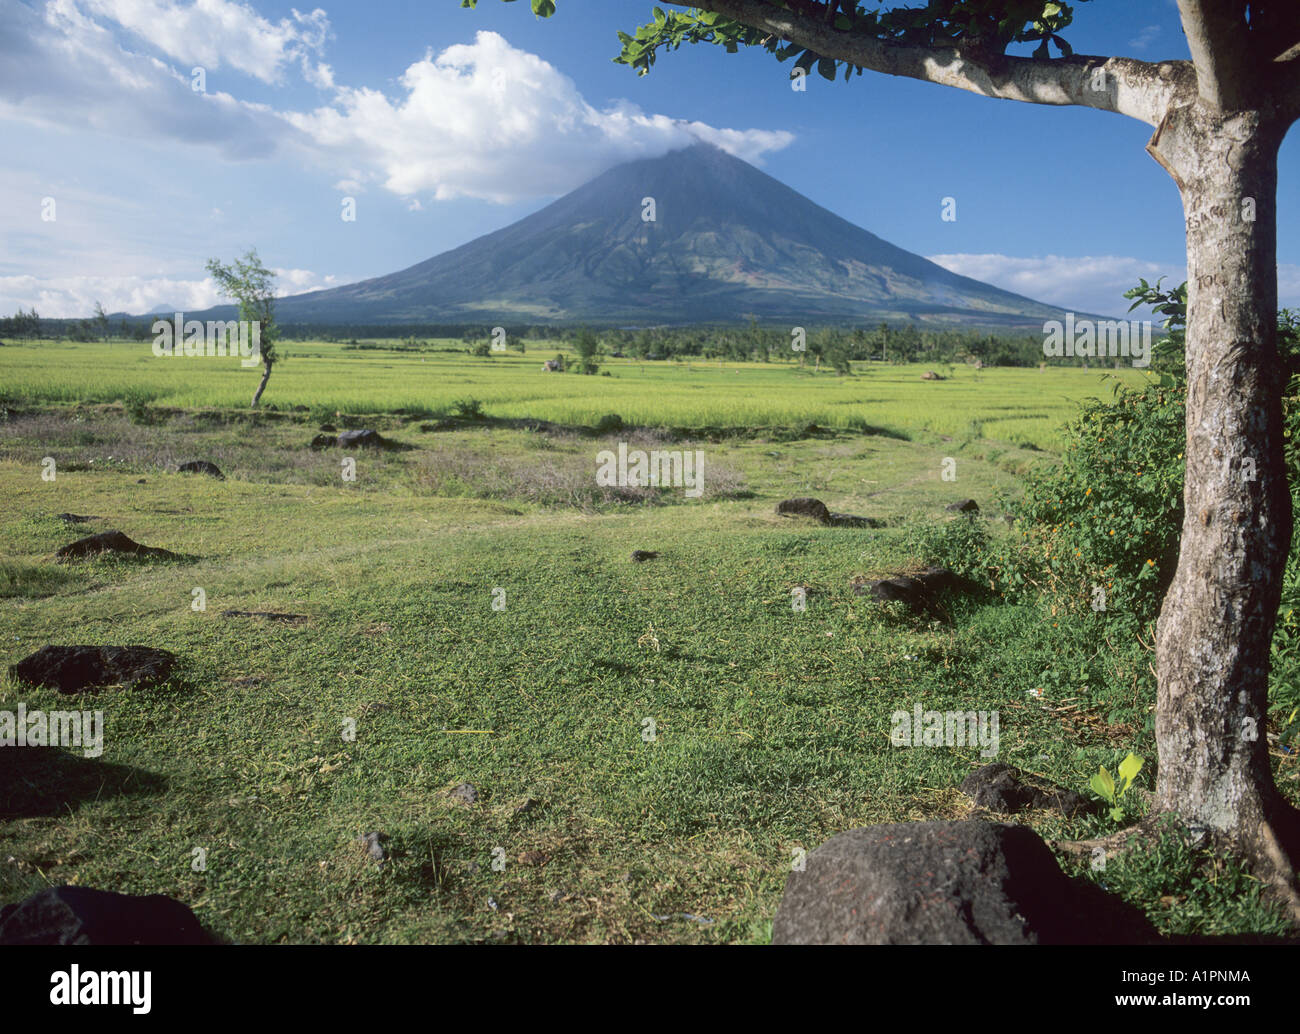 The Mayon Volcano, Bicol, Philippines. Stock Photo